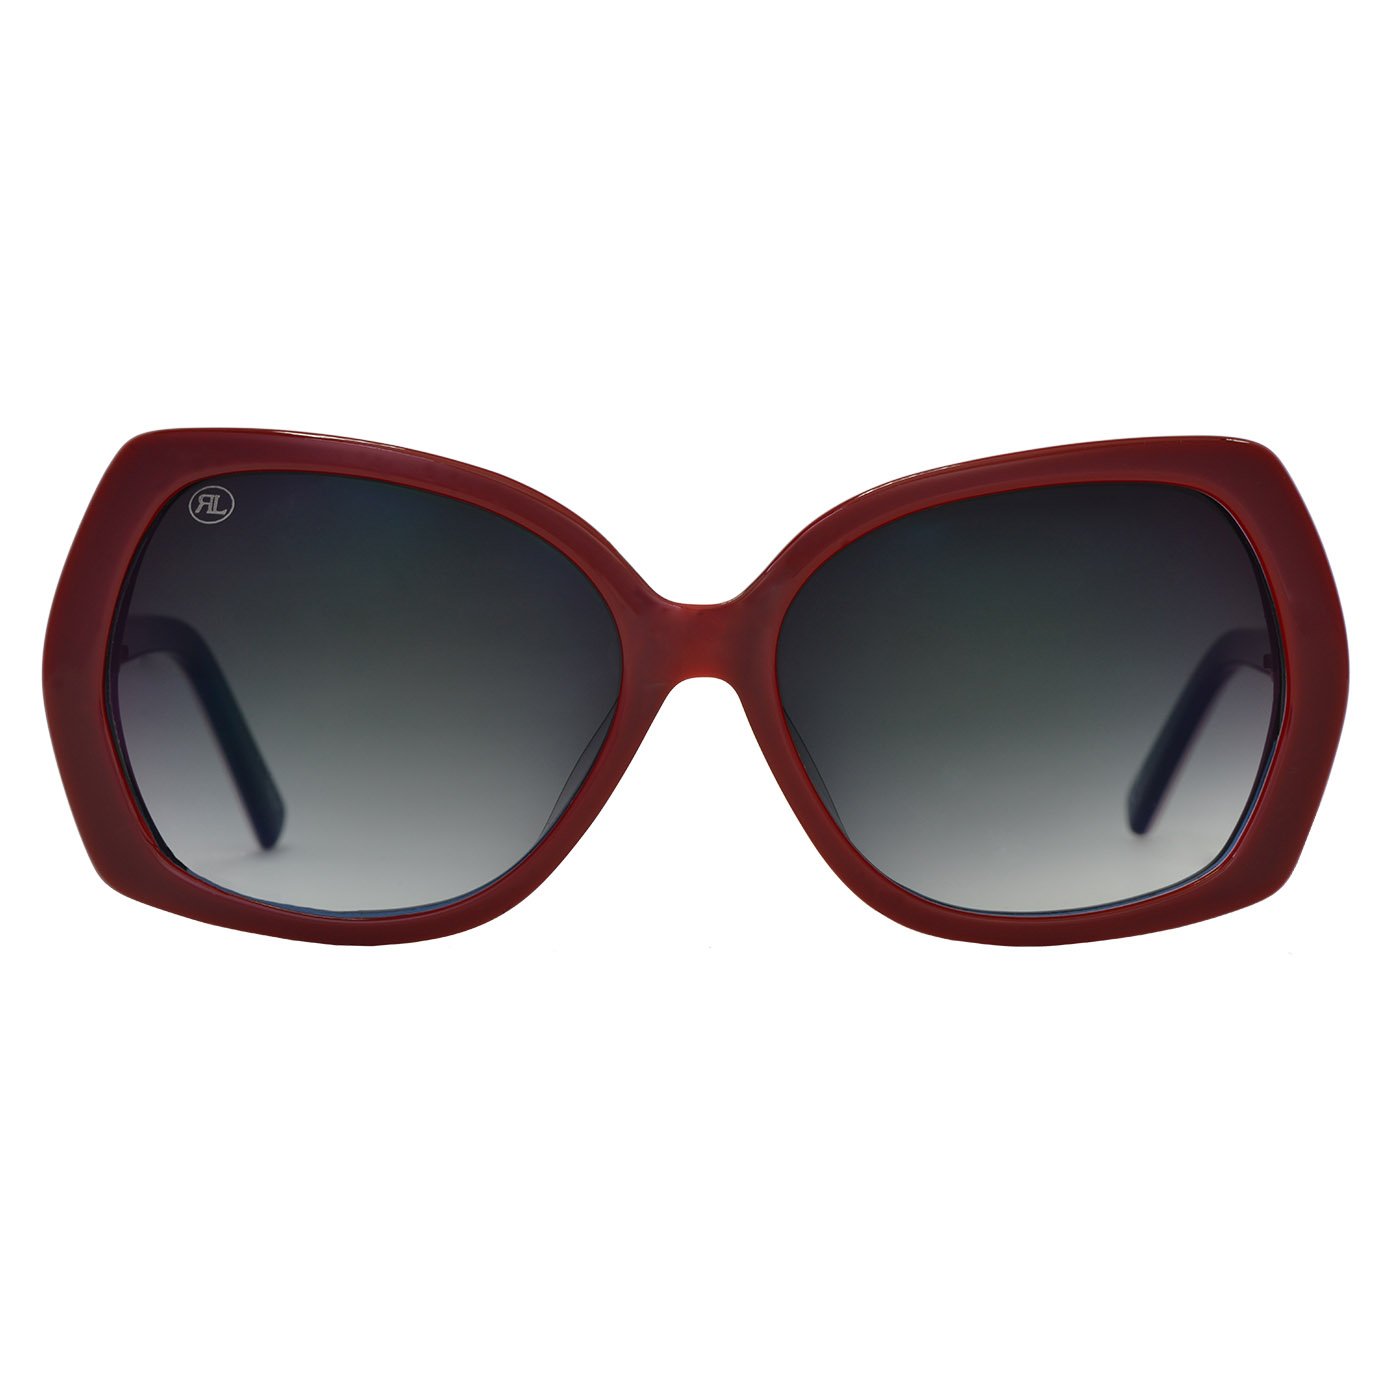 RENATO LANDINI Women's Sunglasses Maroon & Blue/ Angel Eye